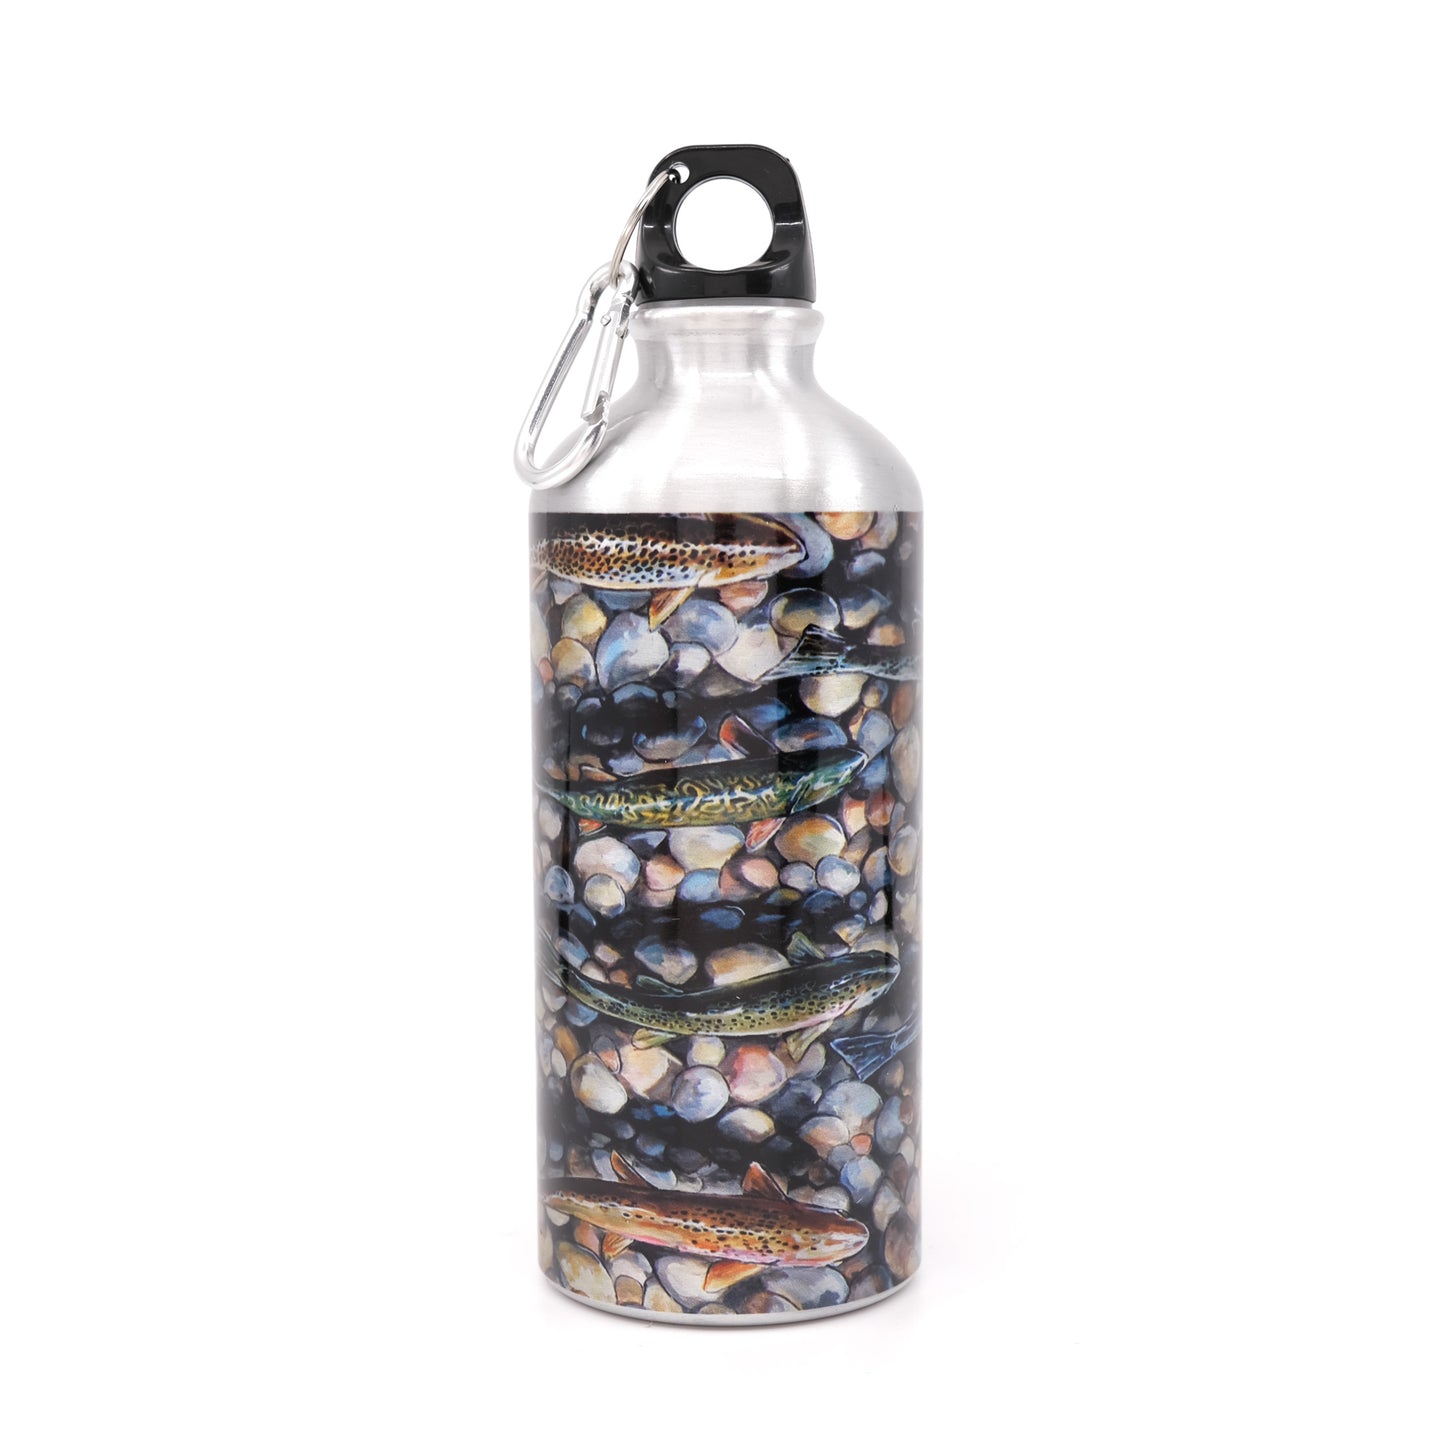 MFC Water Bottle - Udesen's Trout Dreams